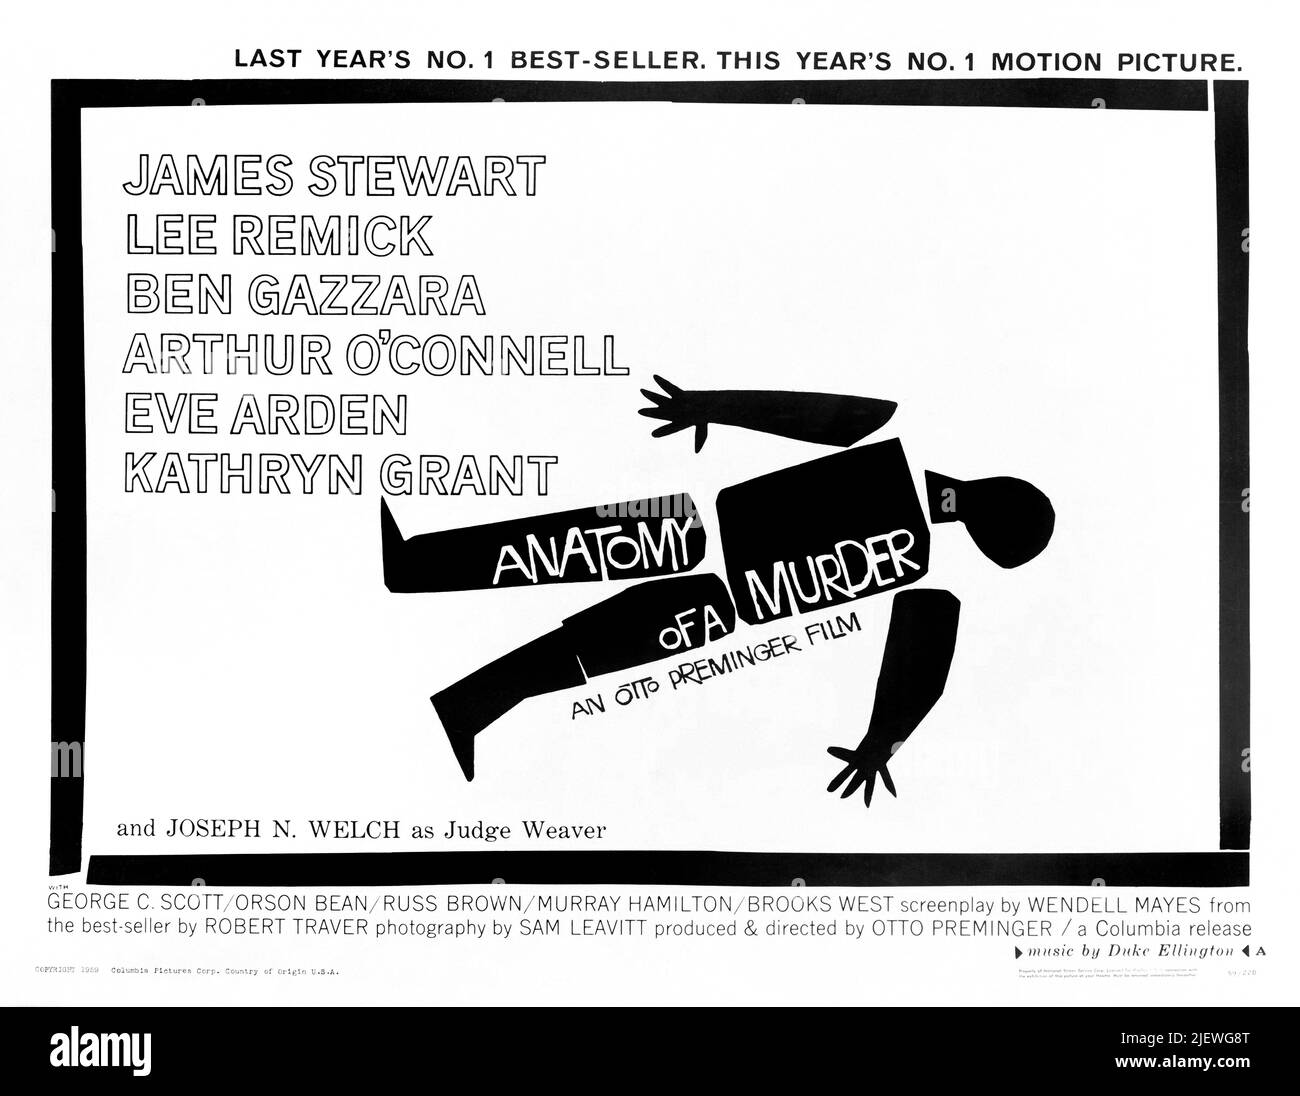 Vintage Film Poster for - Anatomy of a Murder -  Otto Preminger's 1959 Thriller staring James Stewart, Lee Remick, Ben Gazzara. Columbia Pictures Stock Photo